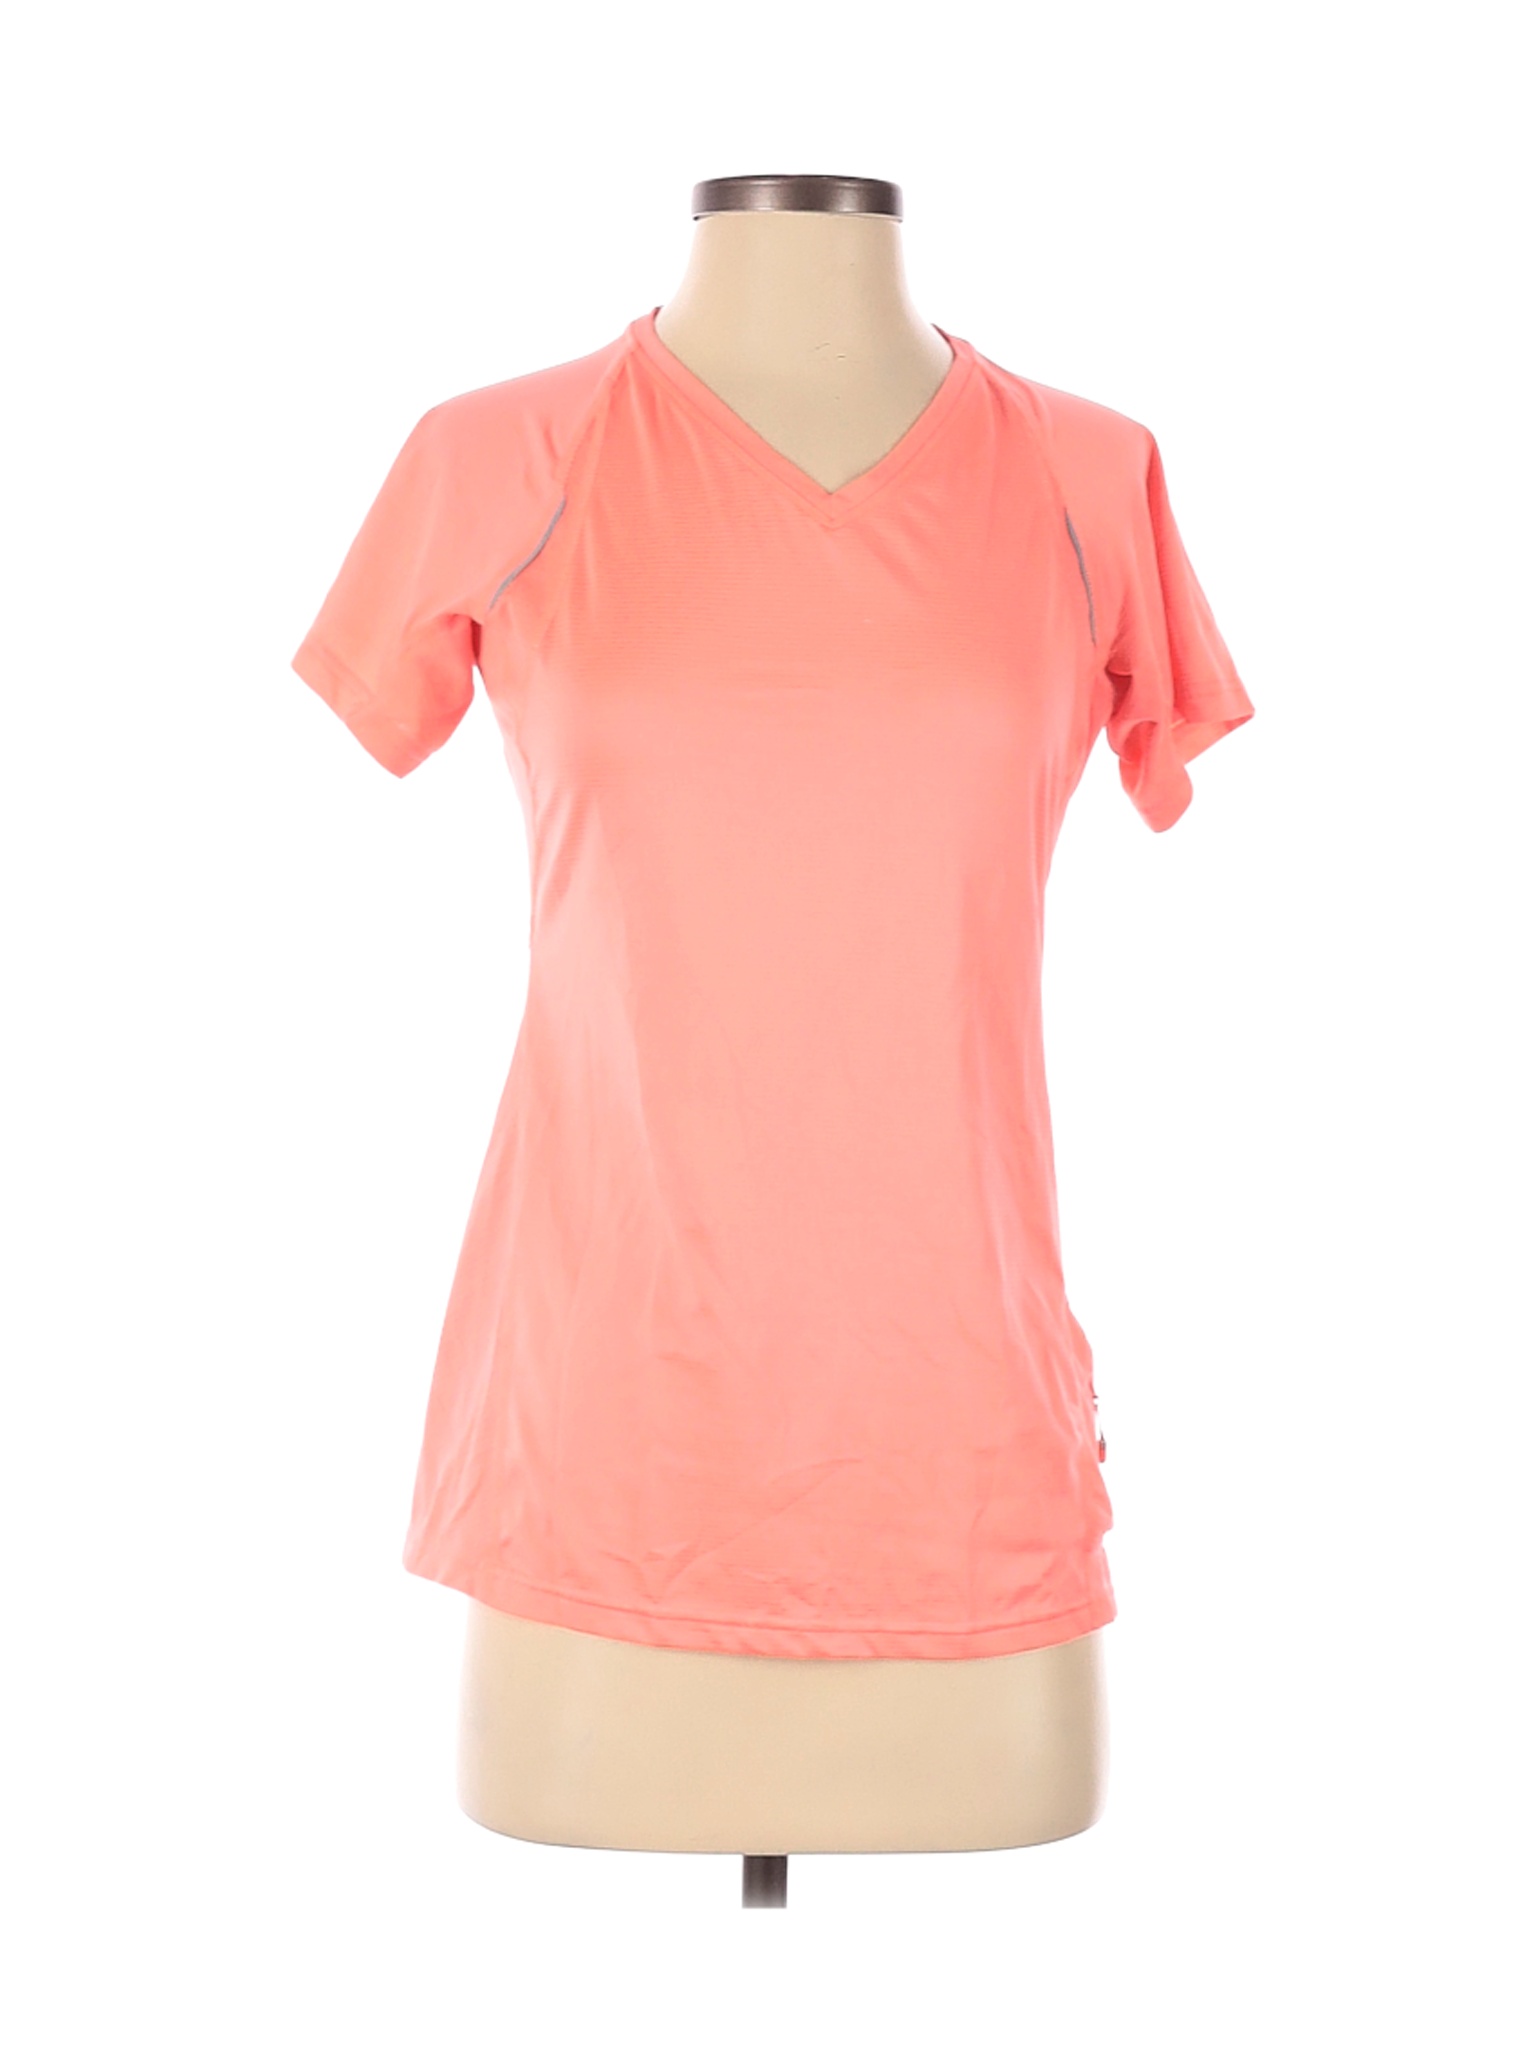 KIRKLAND Signature Women Pink Active T-Shirt S | eBay